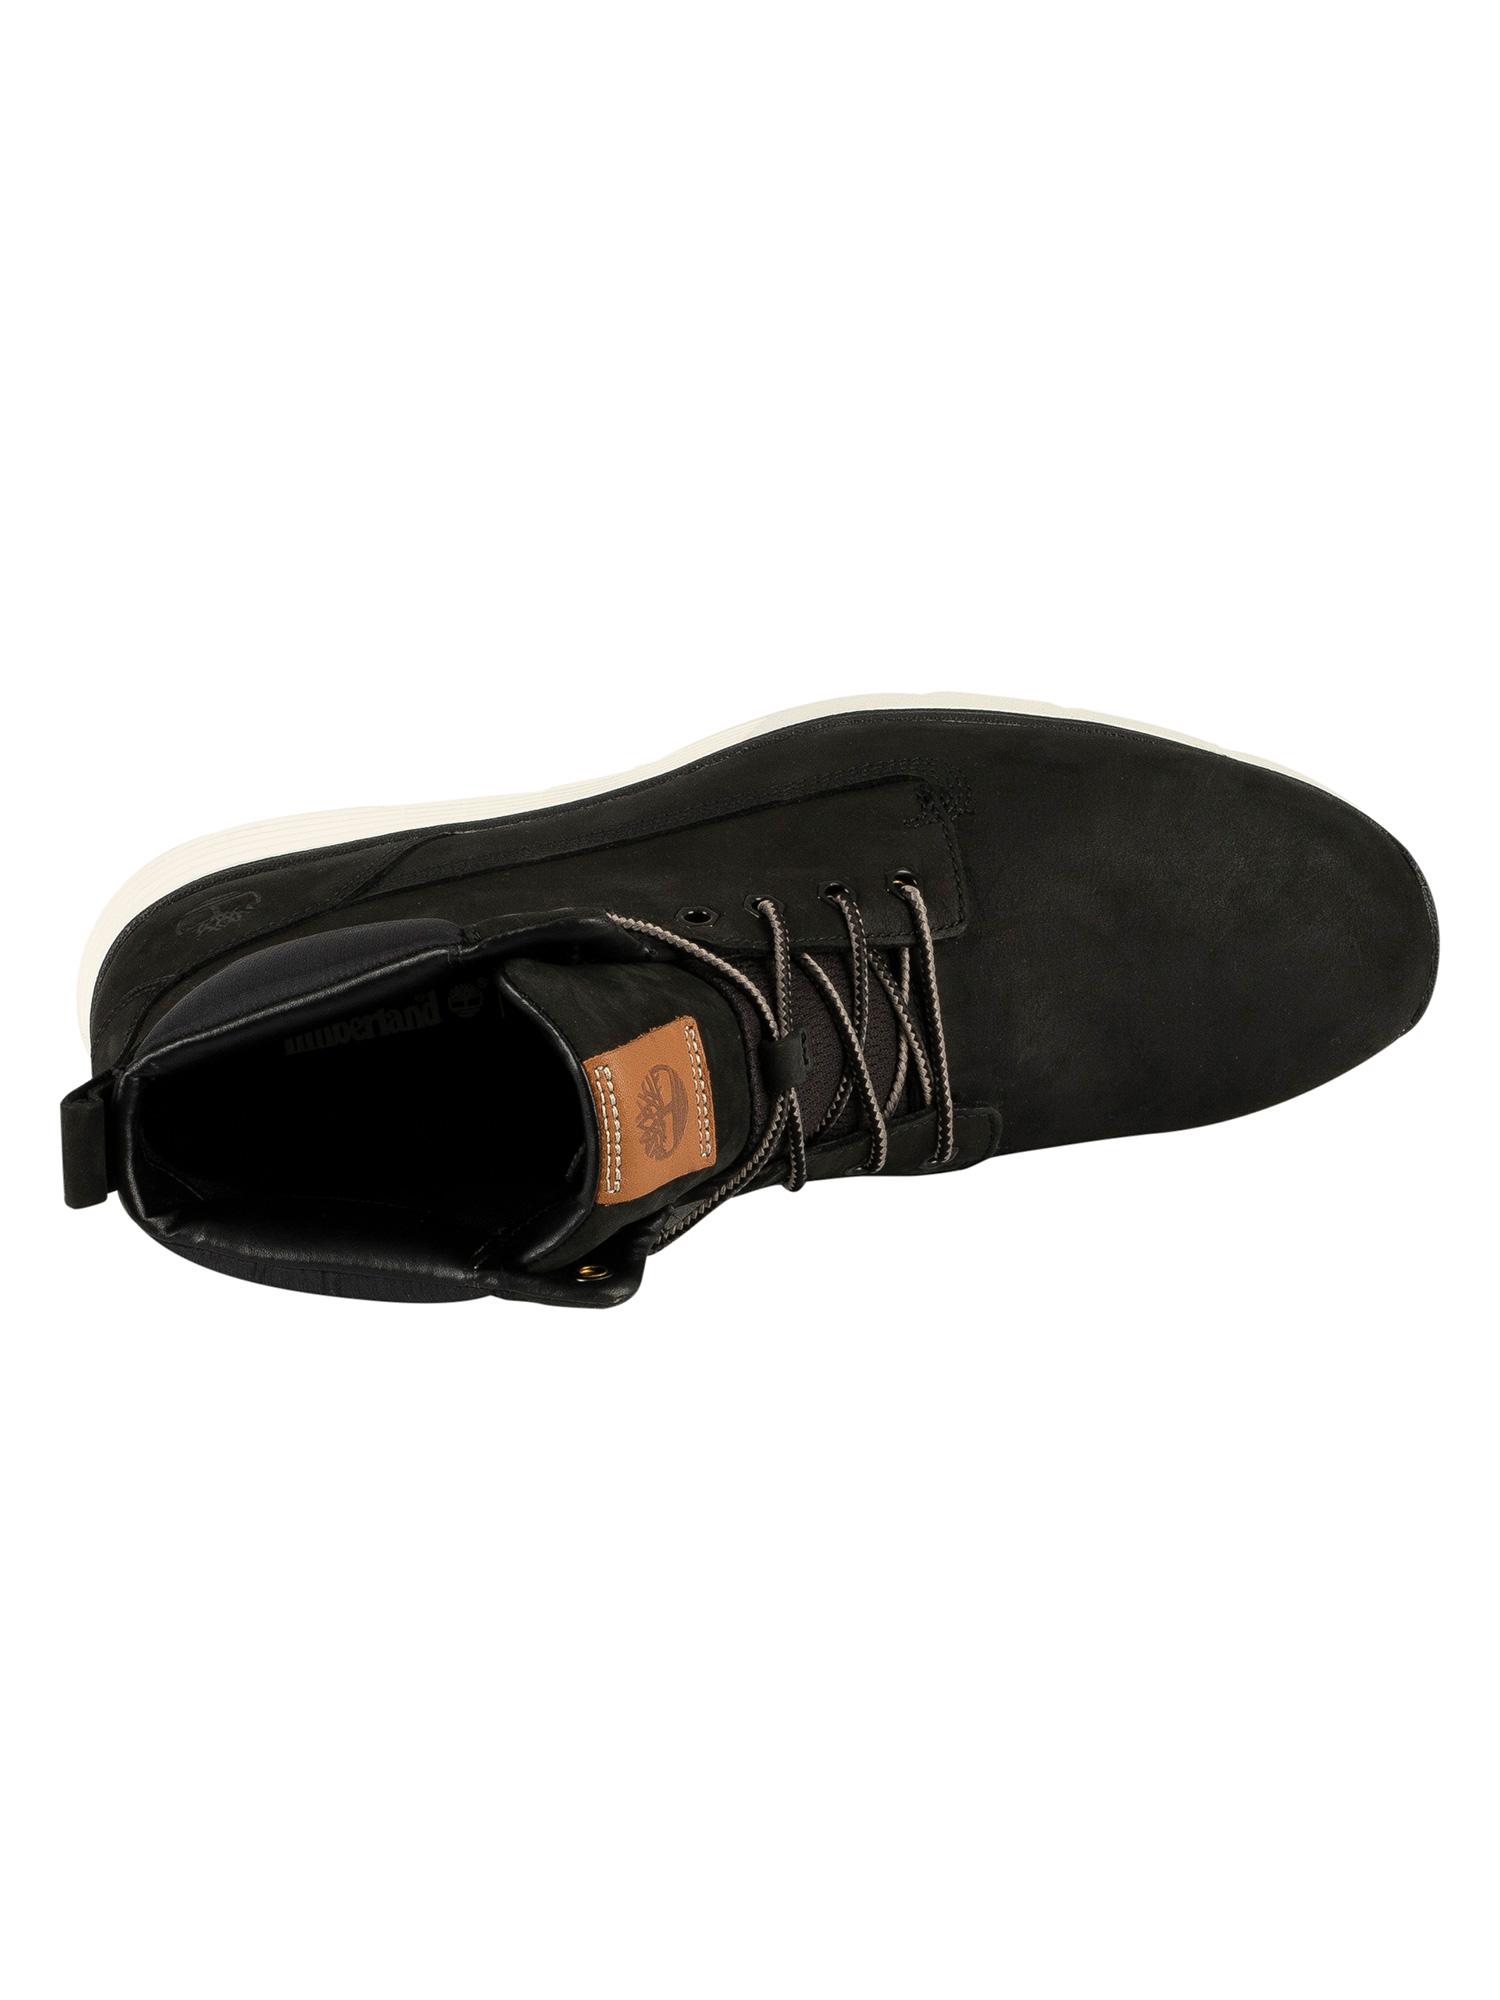 Timberland Leather Killington Chukka Boots in Black Nubuck (Black) for Men  - Lyst